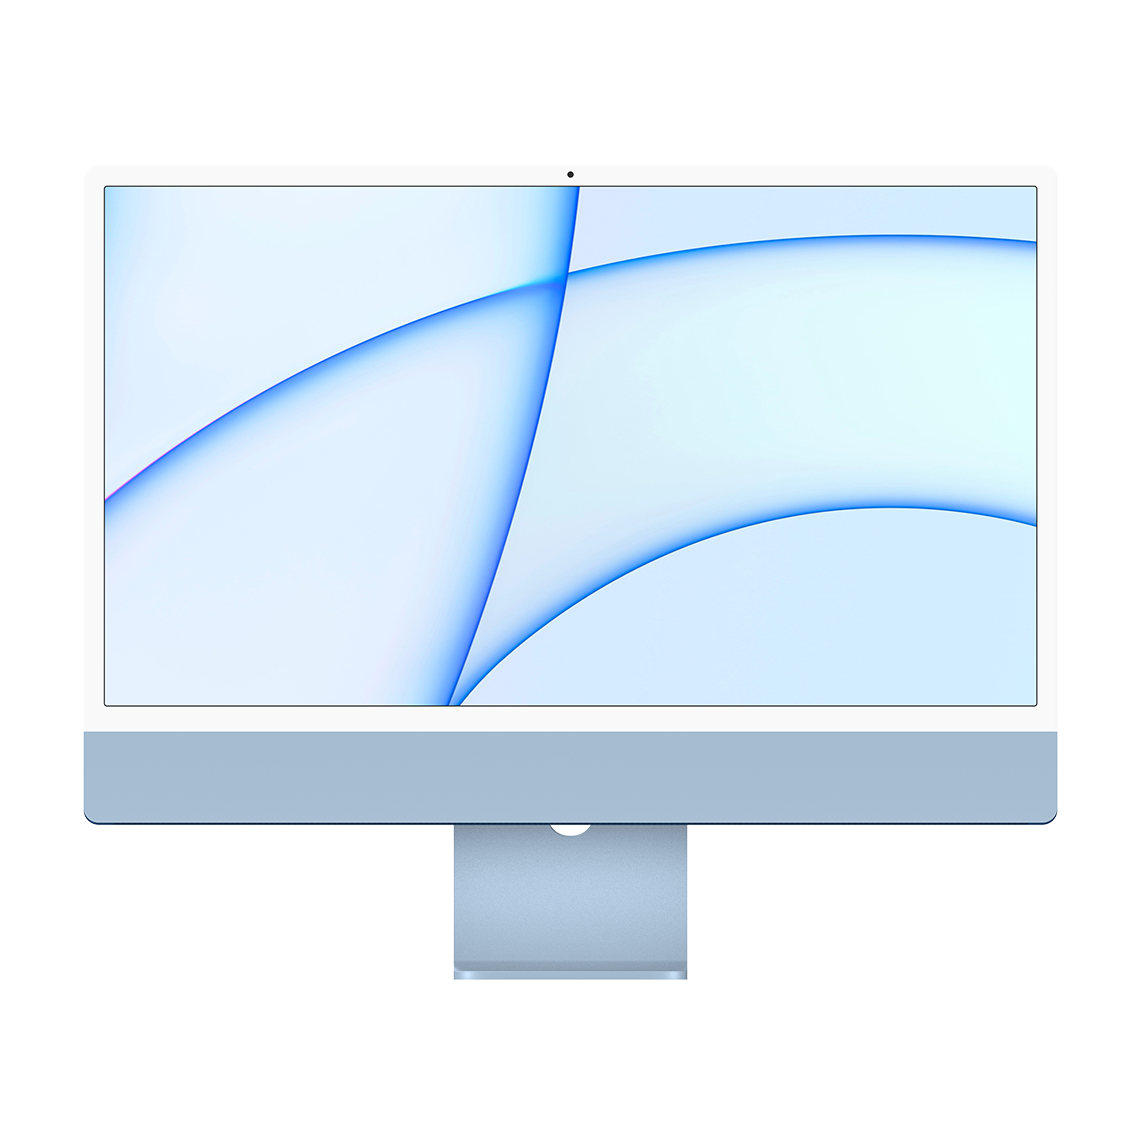 Apple M1 iMac 24-inch - Blue - 8GB RAM, 256GB Flash, 7-Core GPU, 2 Ports, Open Box